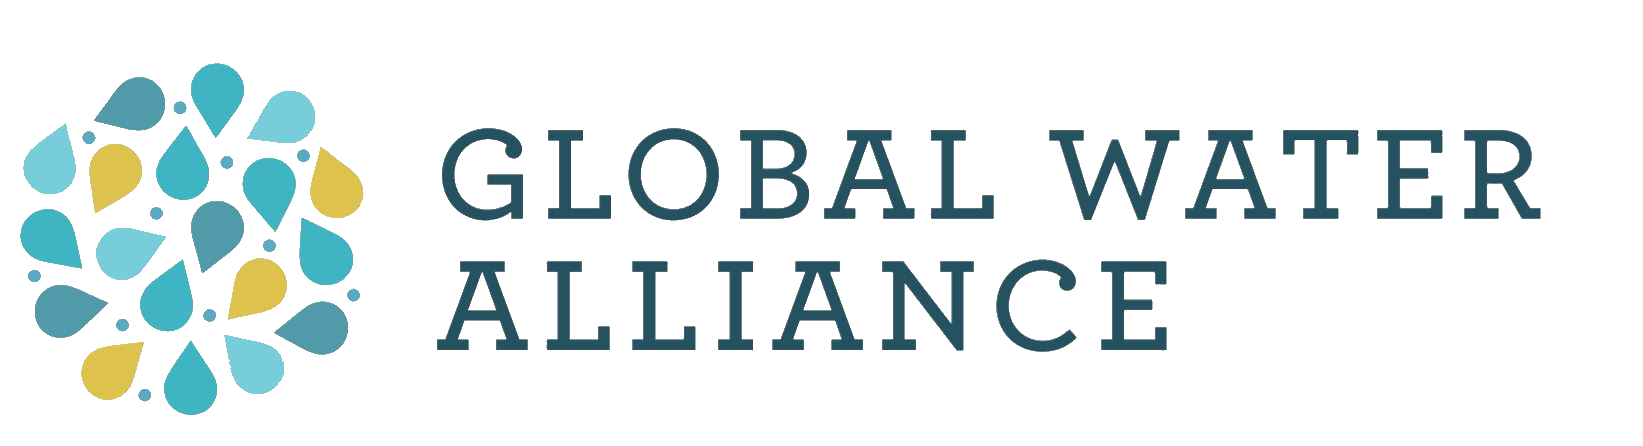 global water alliance logo